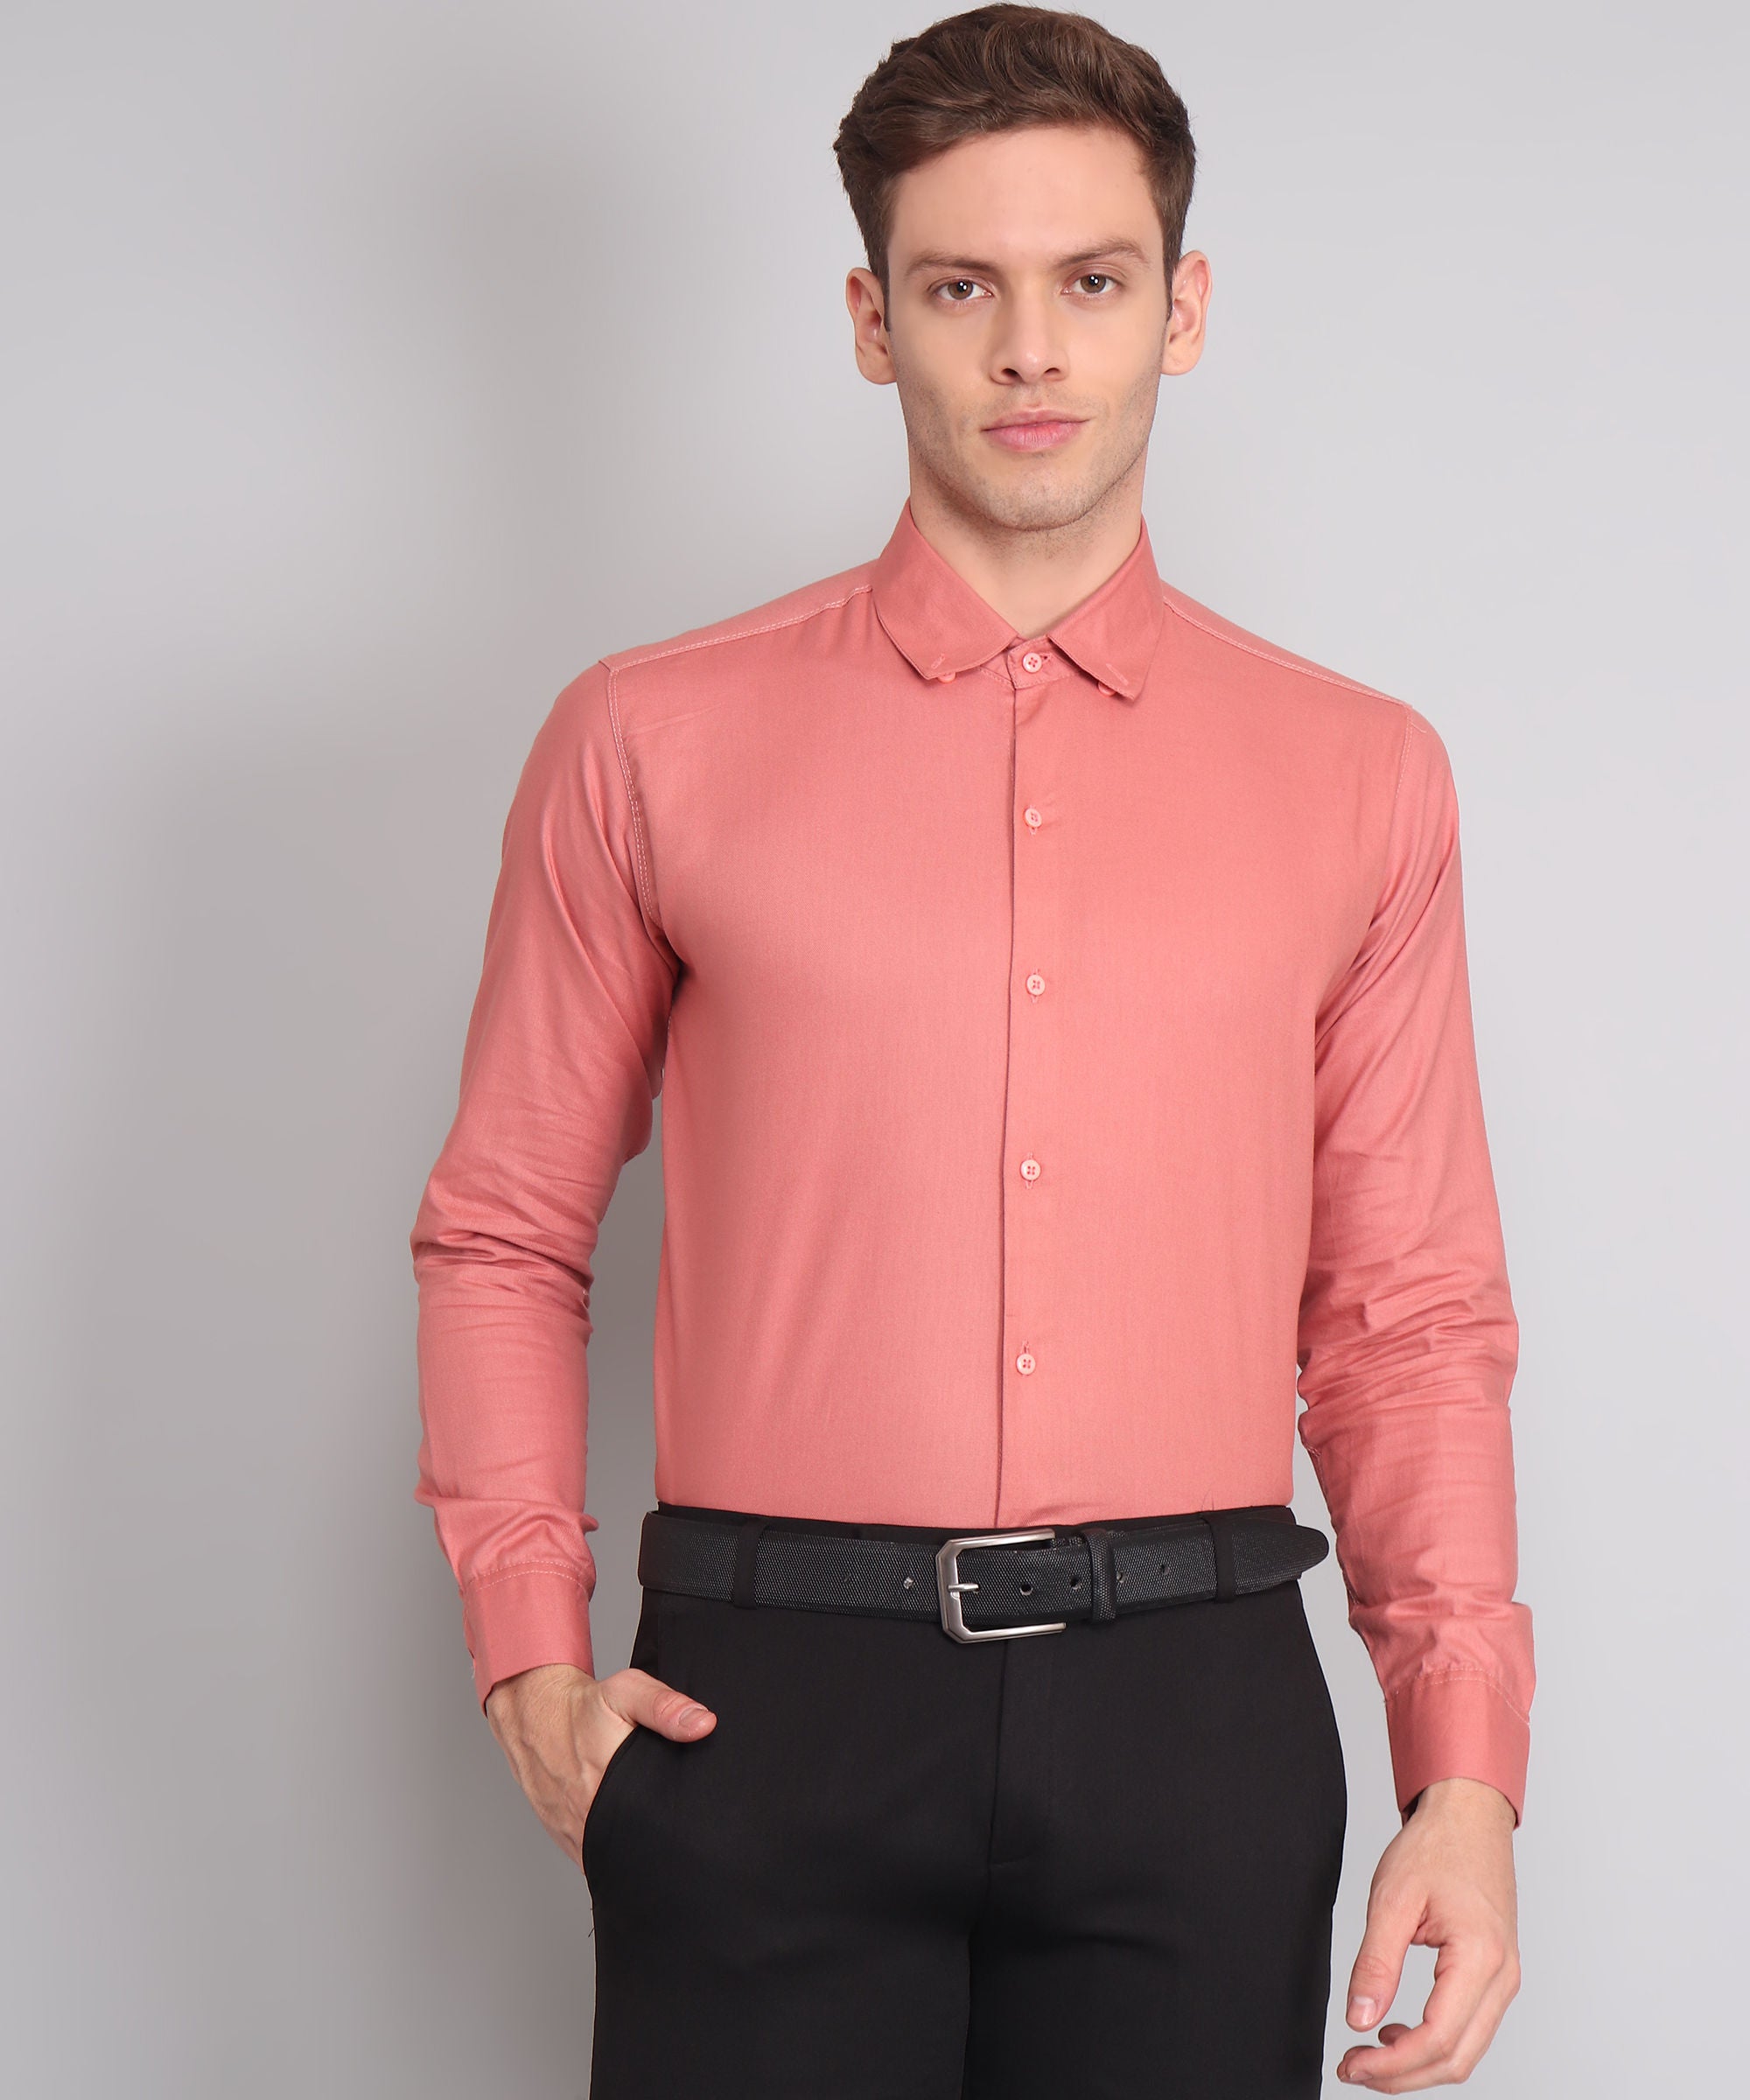 Exclusive TryBuy Premium Peach Dress Shirt for Men